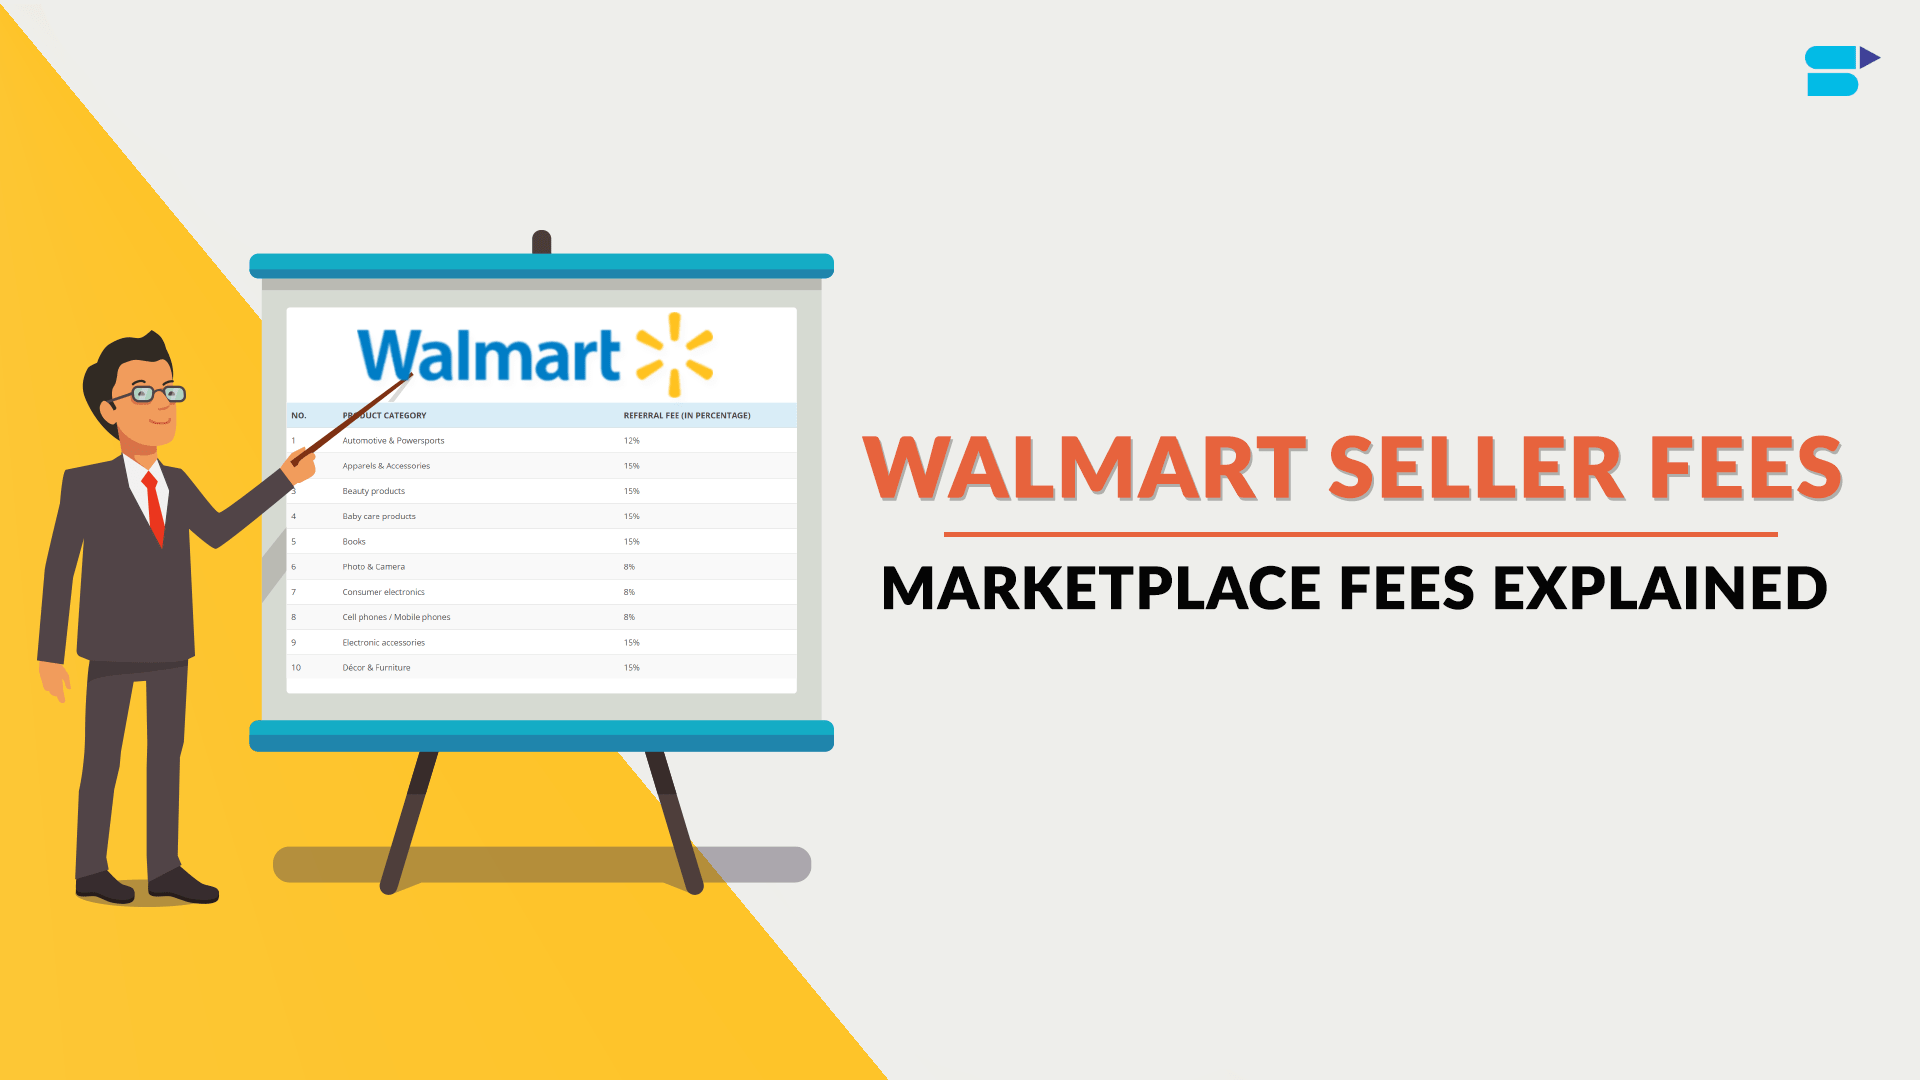 https://www.sellerapp.com/blog/wp-content/uploads/2018/12/Walmart-Seller-Fees-Marketplace-Fees-Explained.png